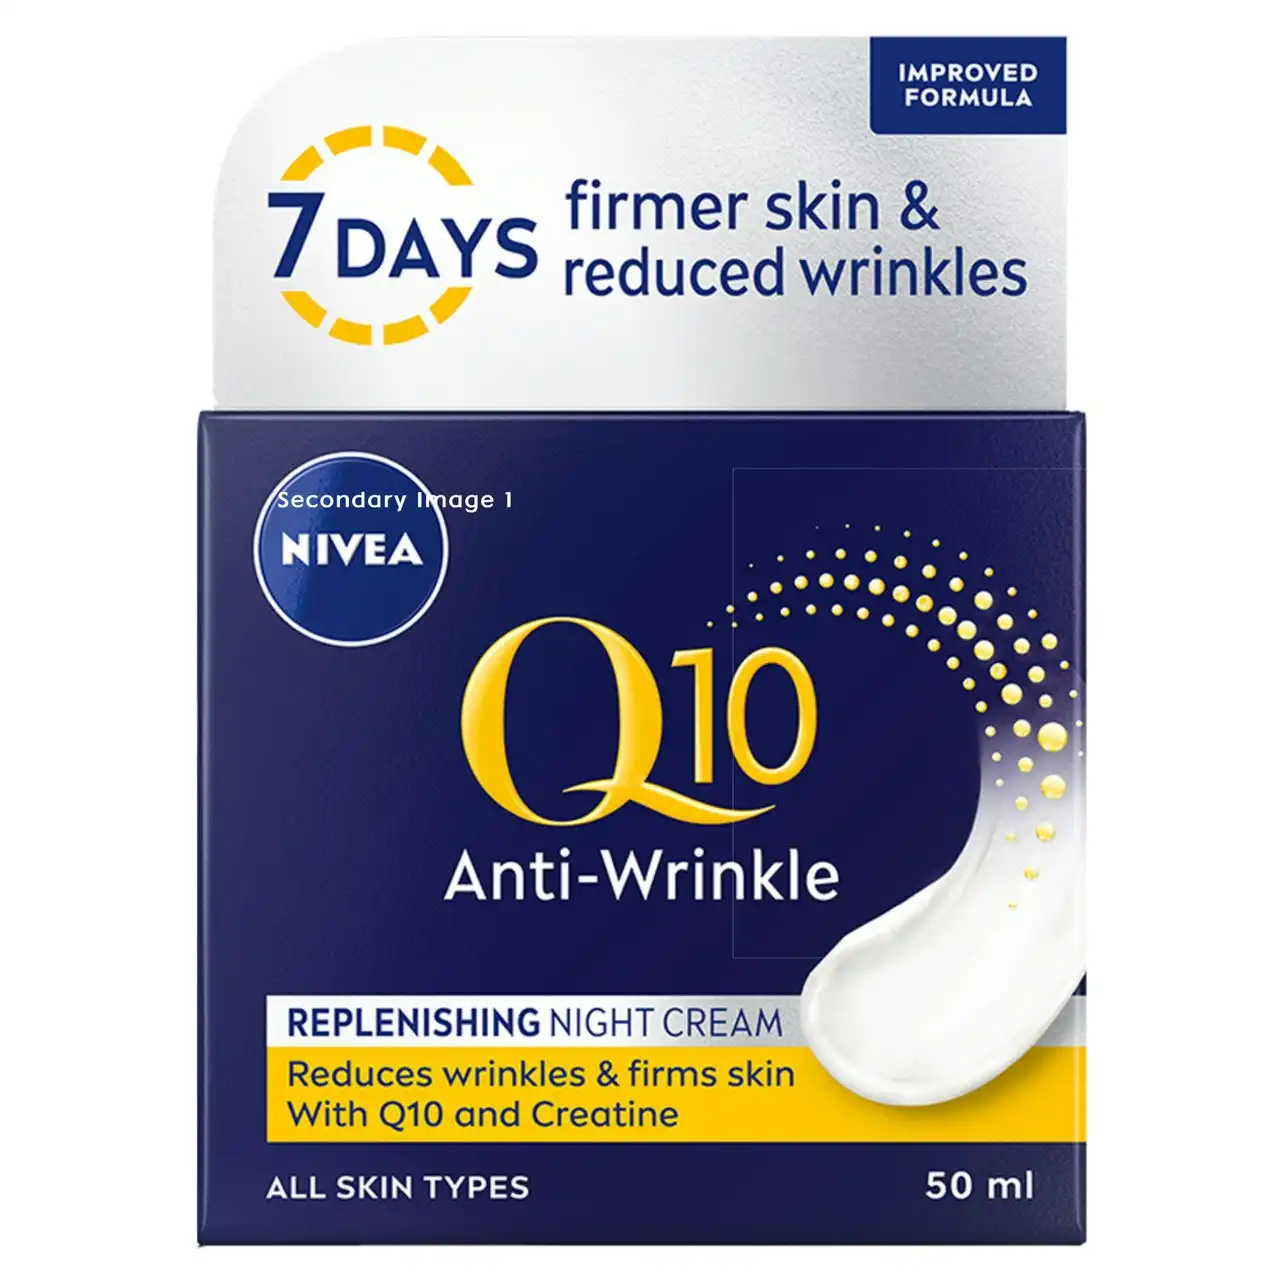 Nivea Q10 Anti-Wrinkle Replenishing Night Cream